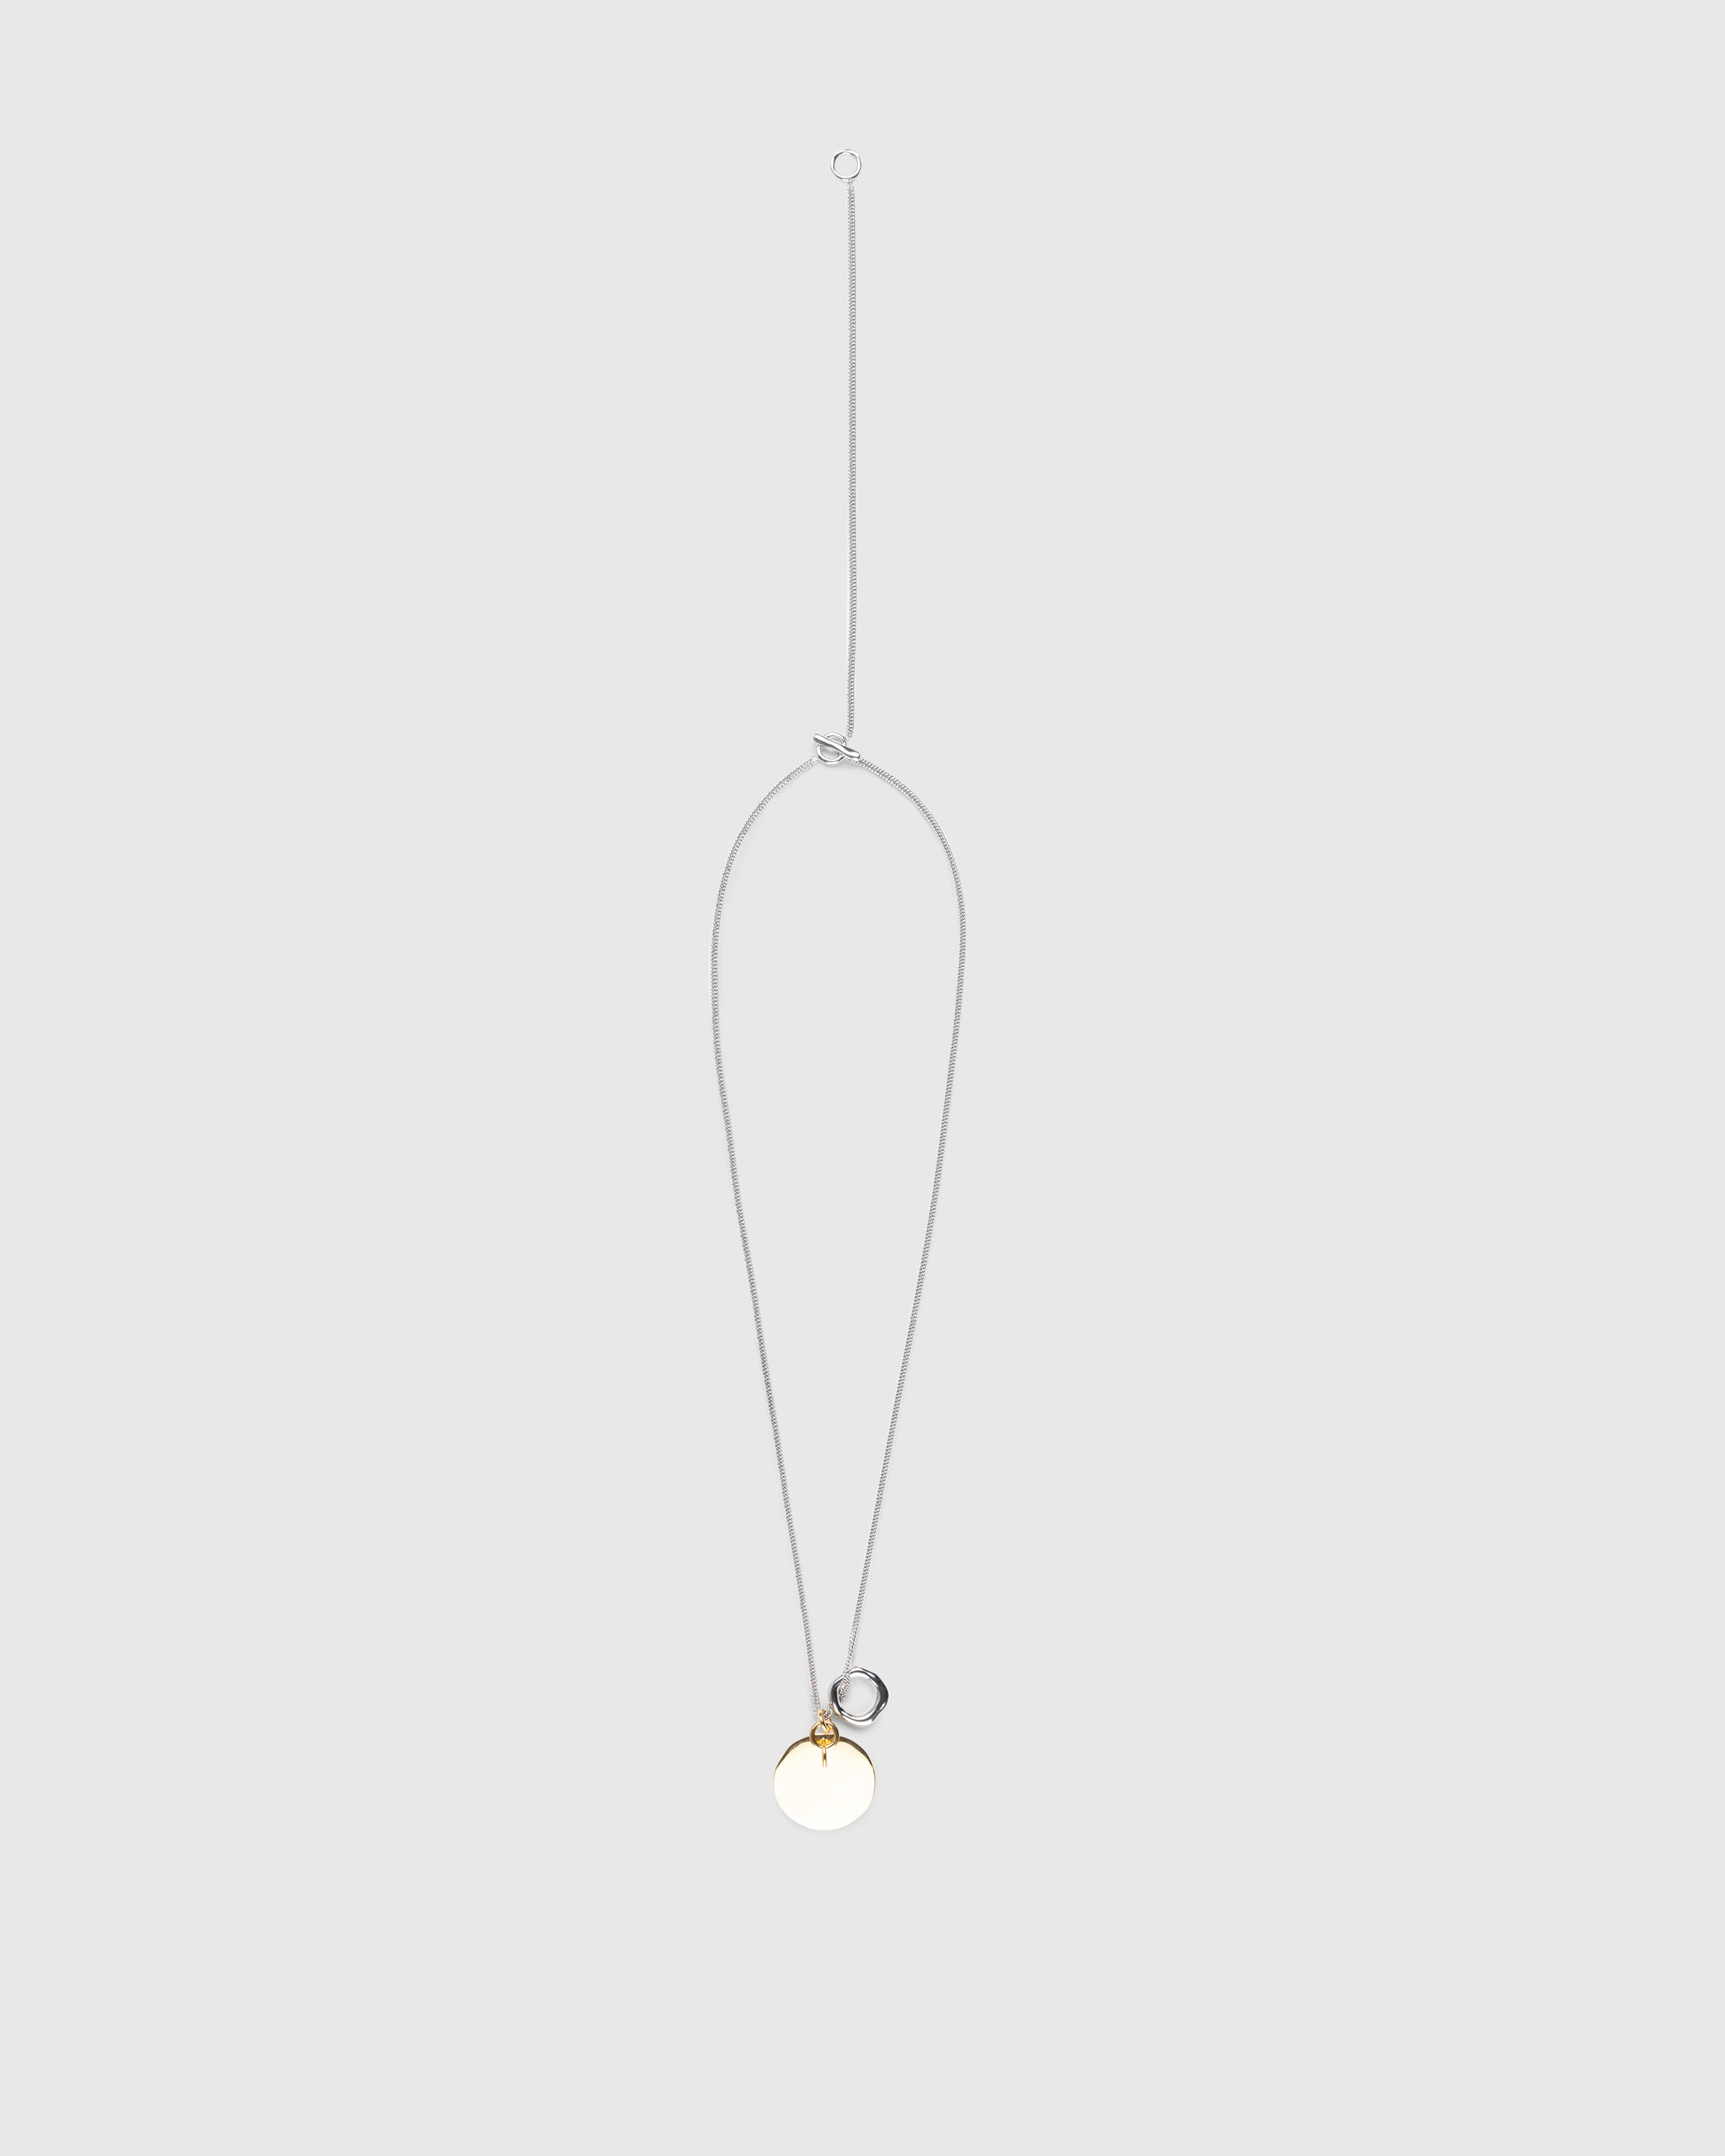 Jil Sander – BM9 Necklace 1 Gold/Silver - Earrings - Gold - Image 3